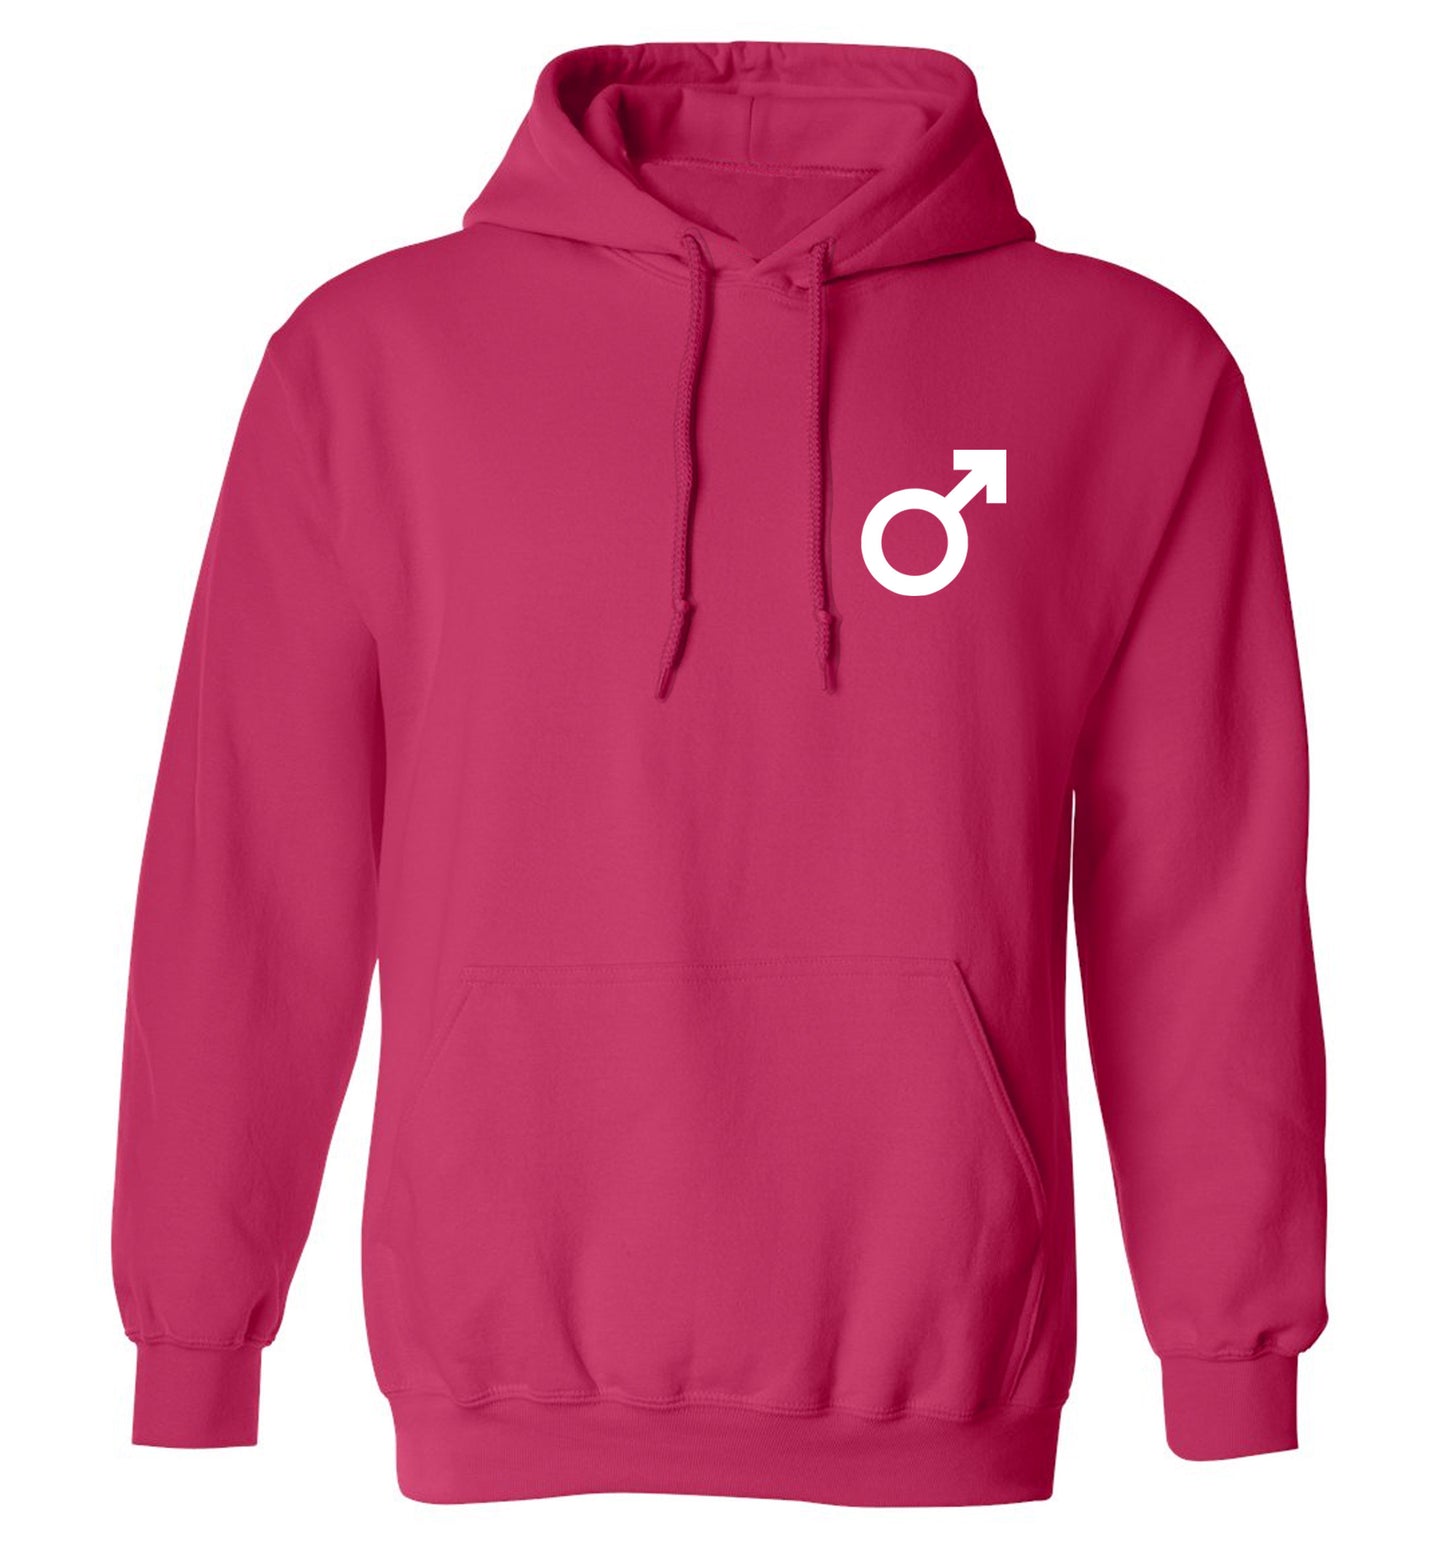 Male symbol pocket adults unisex pink hoodie 2XL